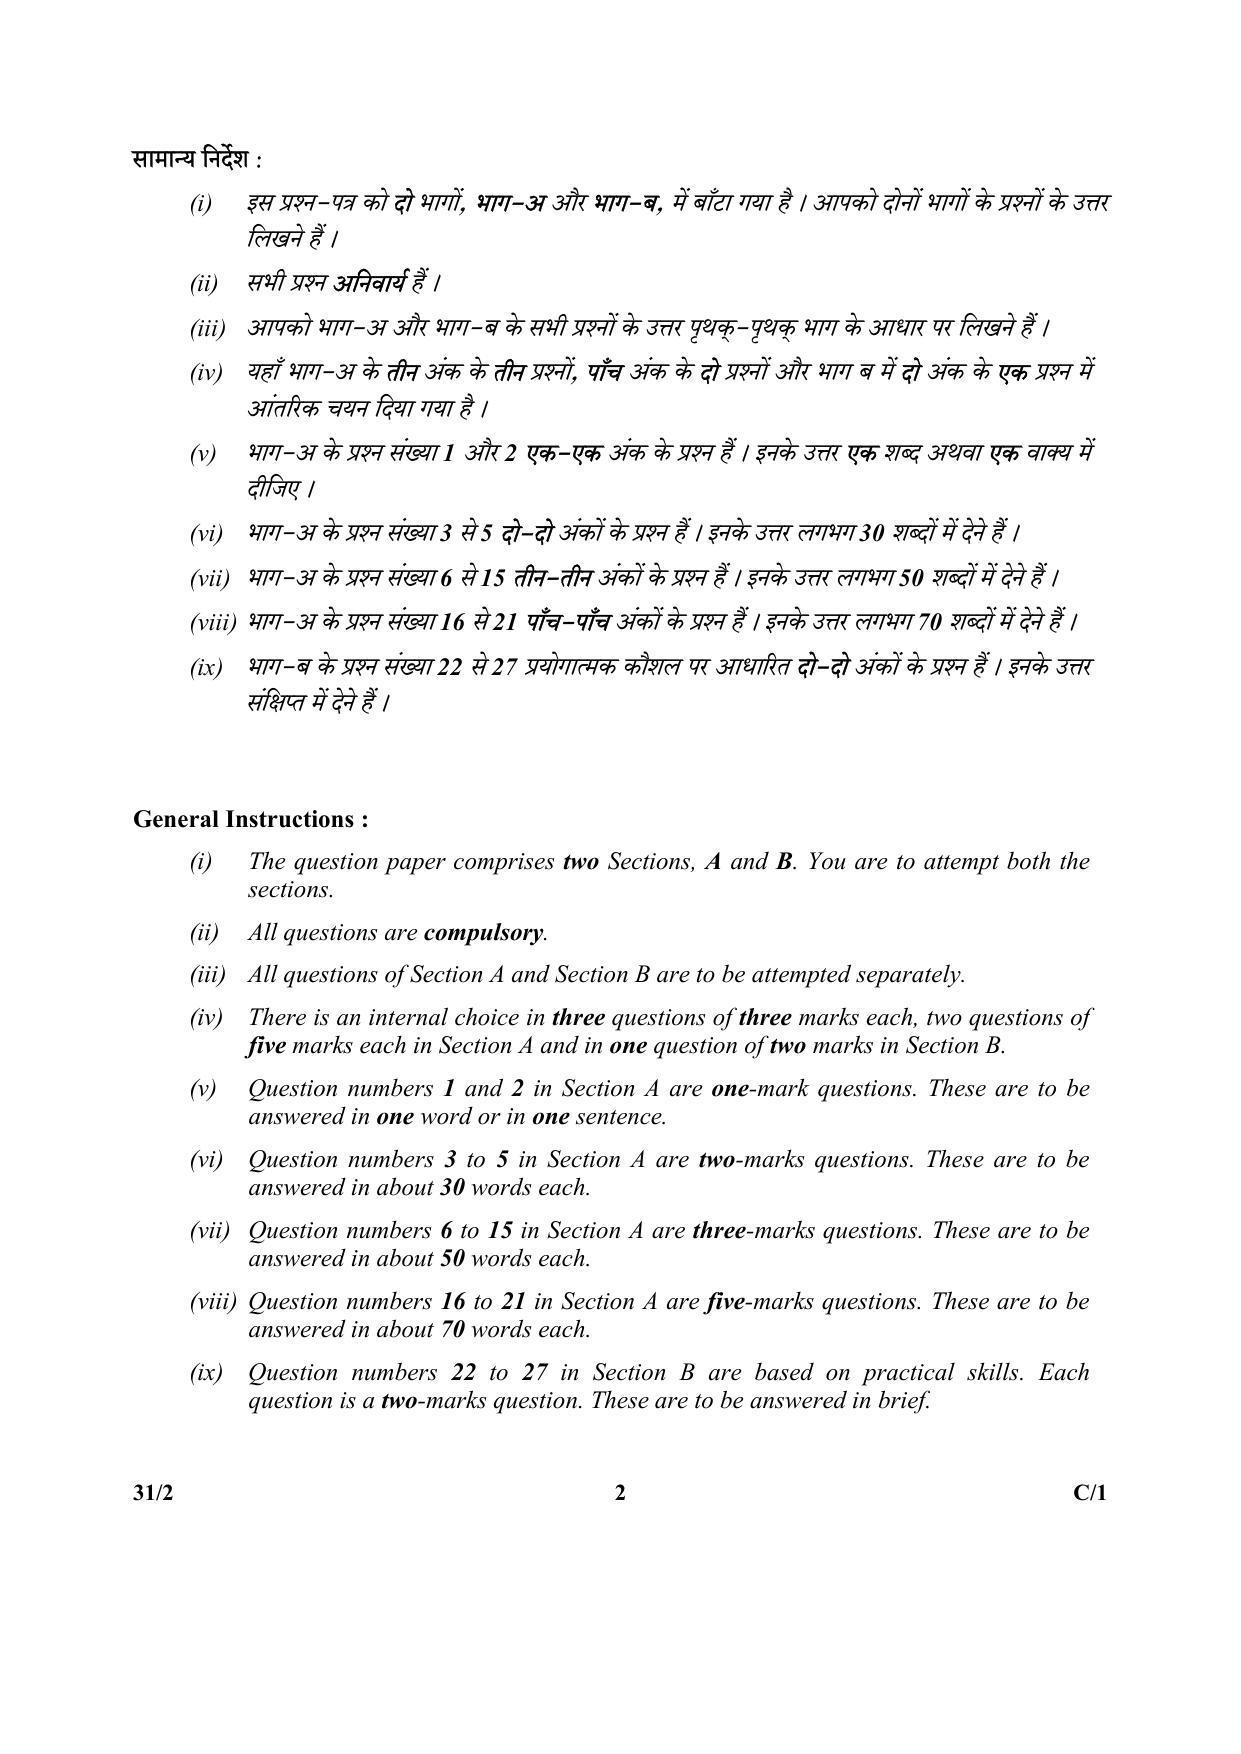 CBSE Class 10 41-2 Science PUNJABI VERSION 2018 Compartment Question Paper - Page 10